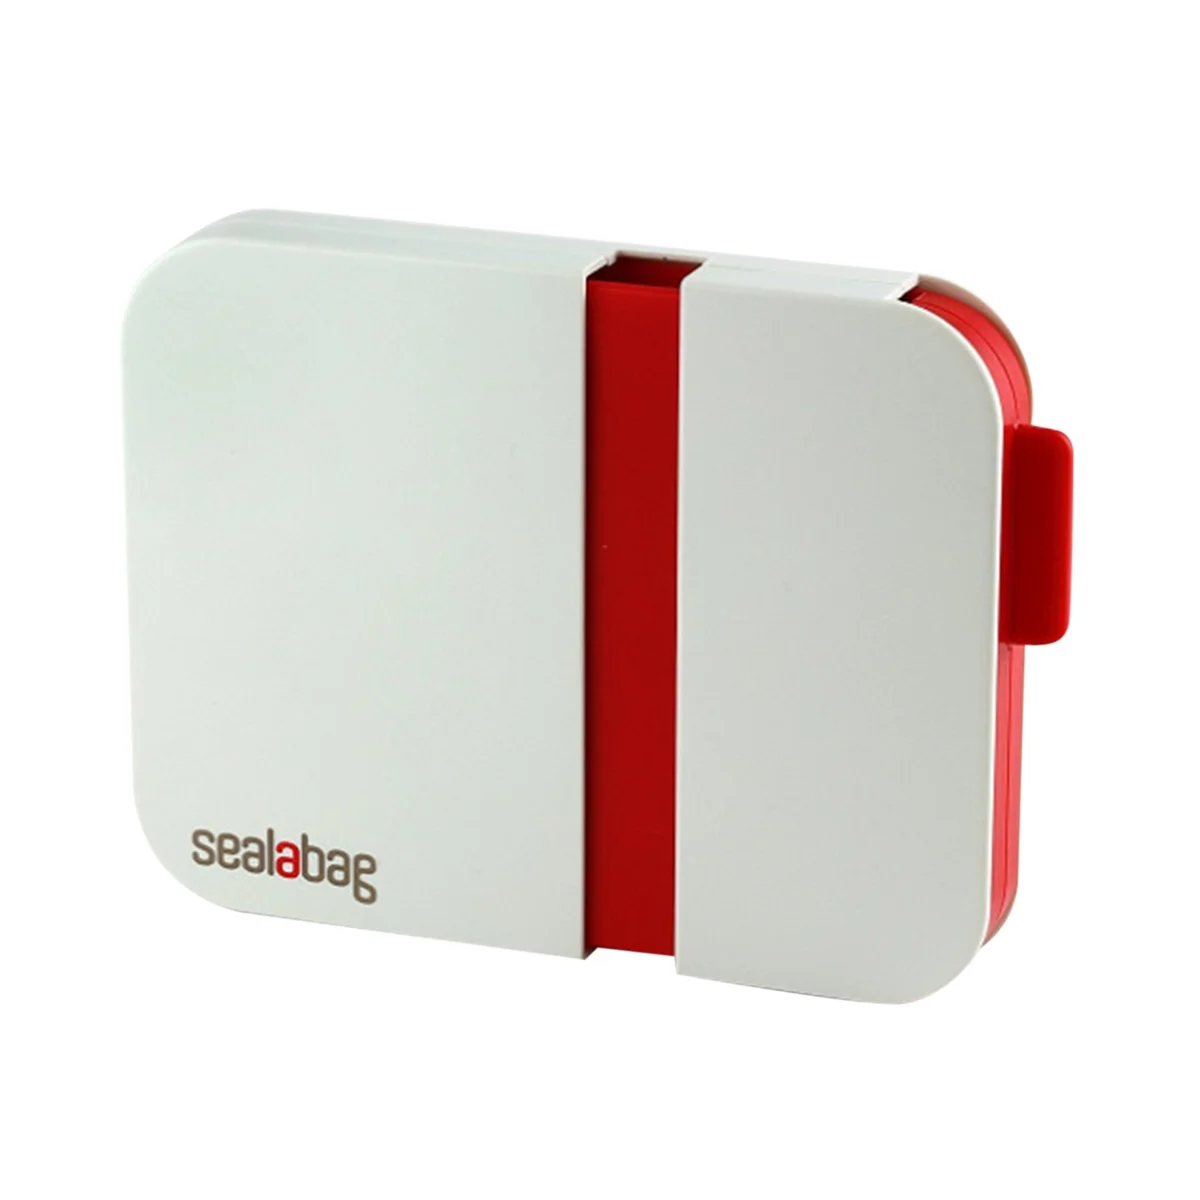 

Portable Machines Mini Handy Sealing Household Heat Food Clip Heat Sealer Home Snack Bag Kitchen Utensils Gadget Red